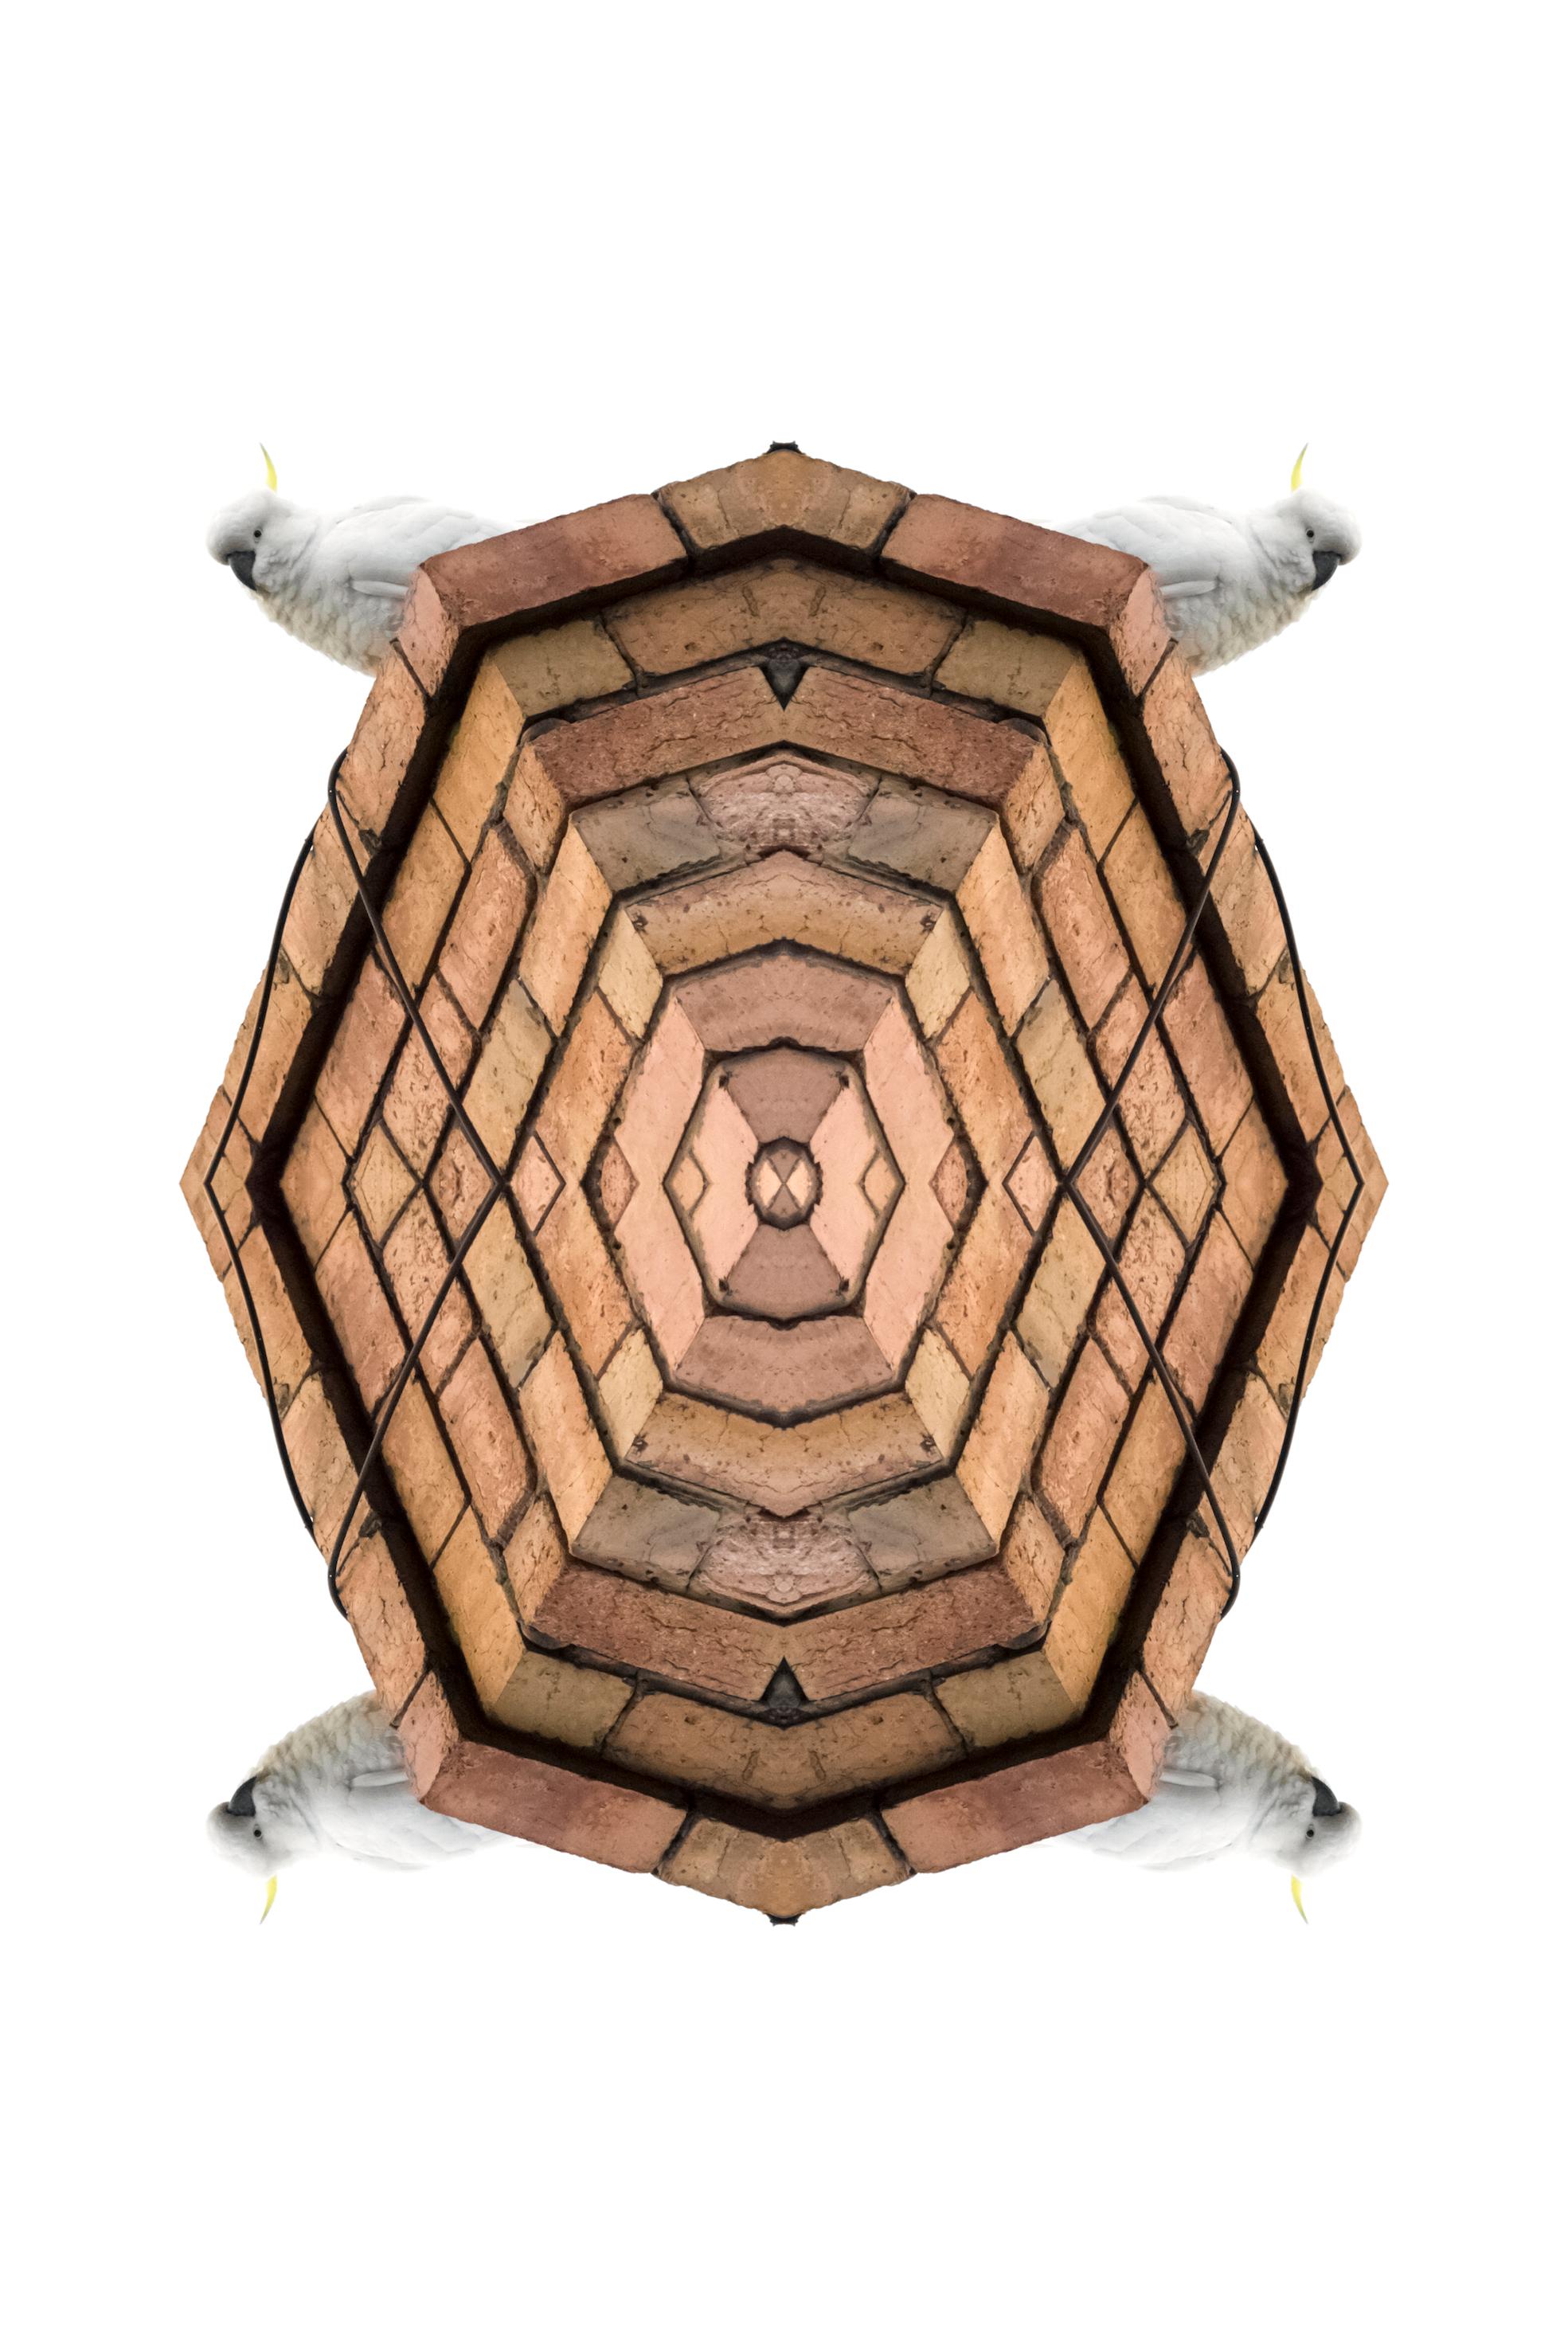 "Sulphur-Crested Cockatoo" Digital Print on Rag Paper by Kent Morris